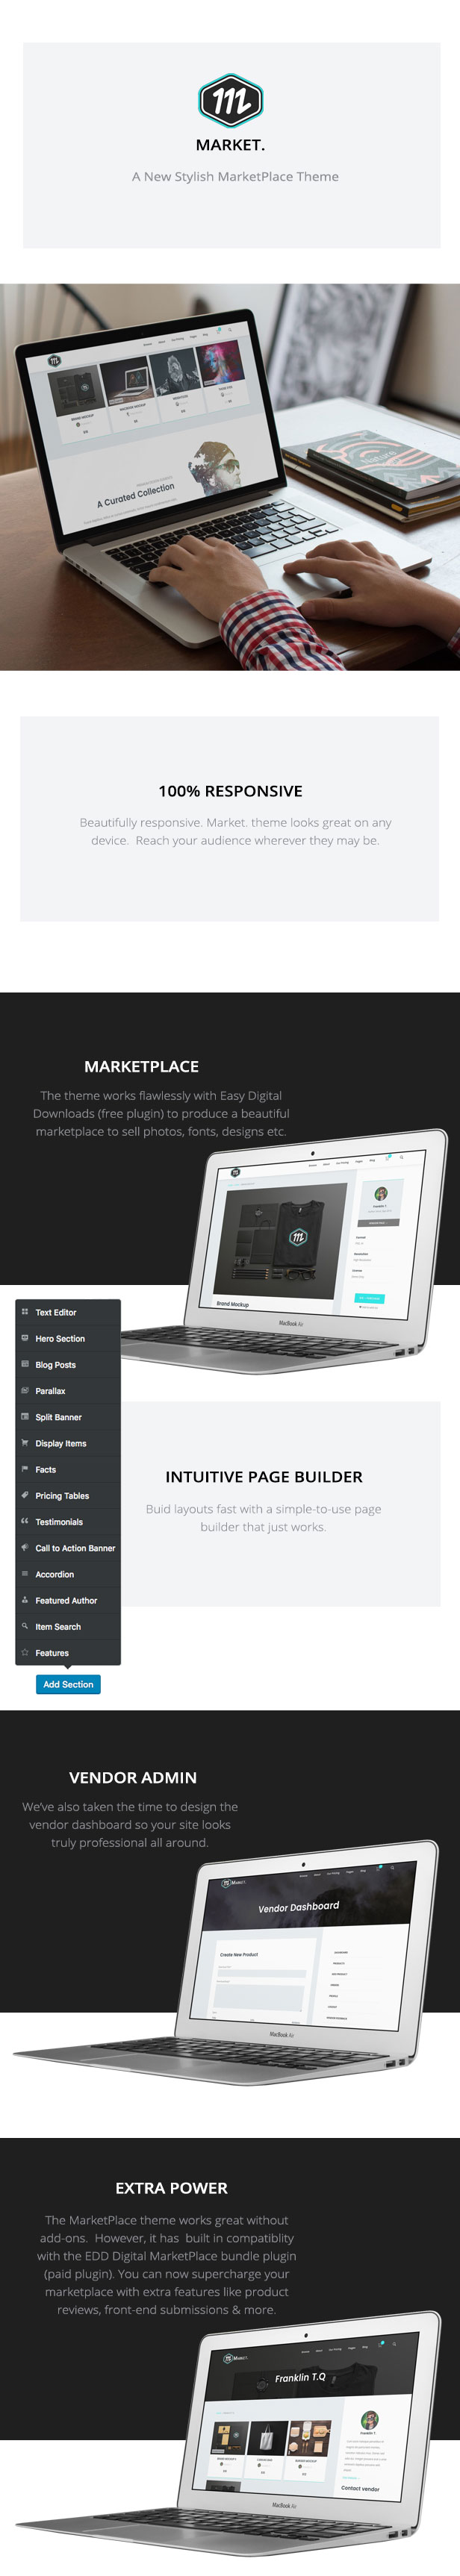 Markt - Marktplatz WordPress Layout